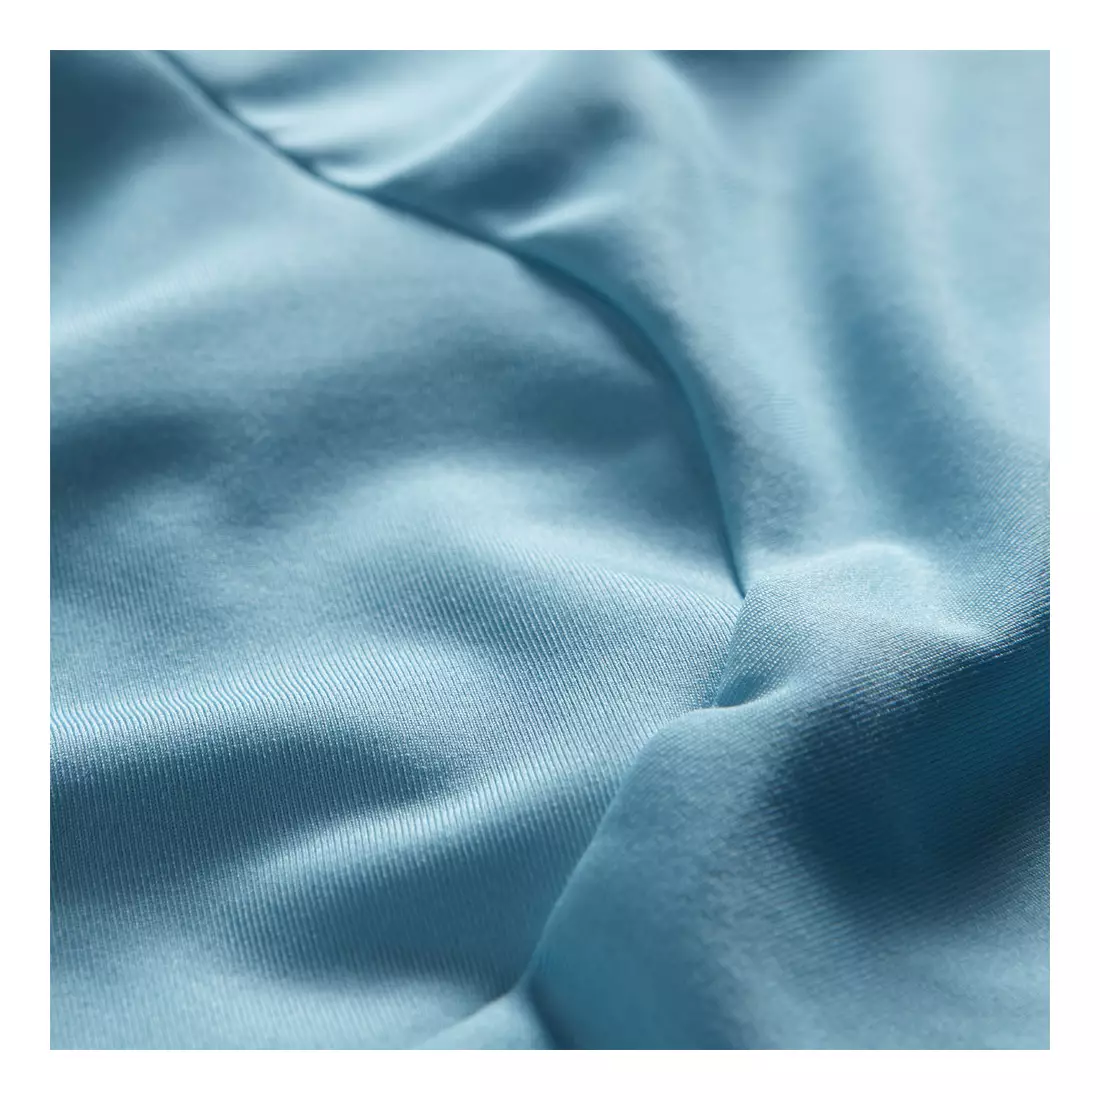 ASICS 110590-0877 PERFORMANCE TEE – Damen-Lauf-T-Shirt, Farbe: Blau